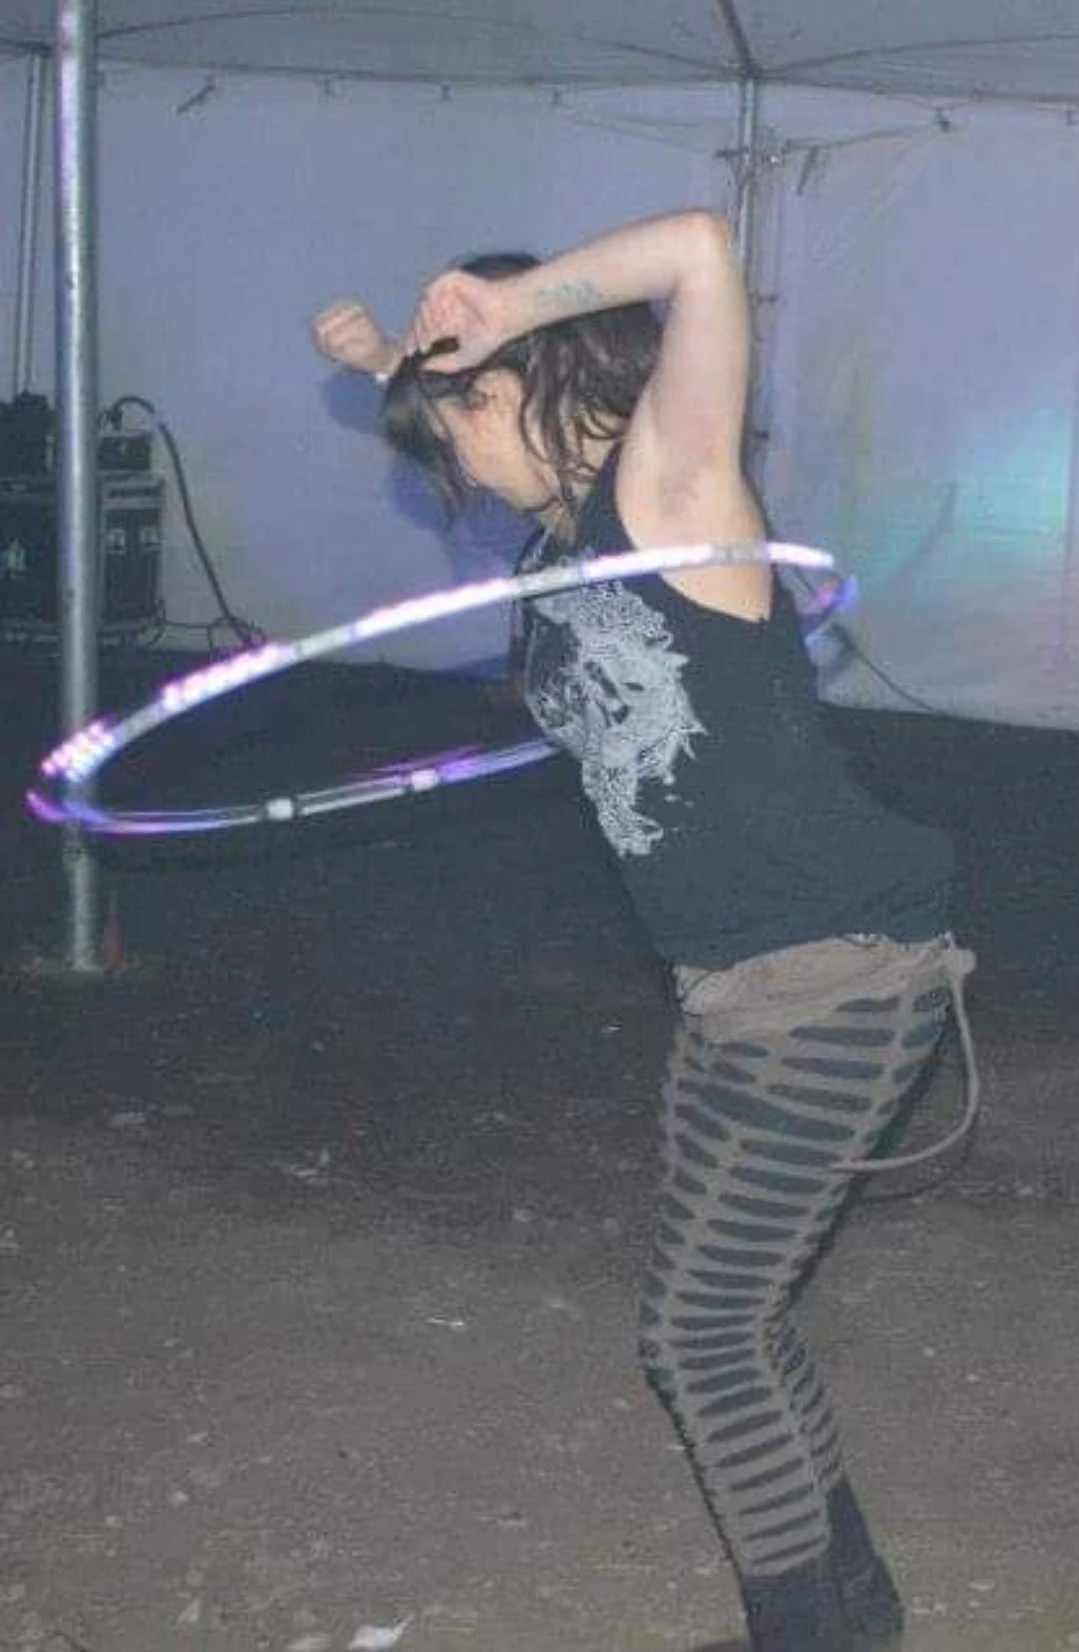 A team member dances with a hula hoop